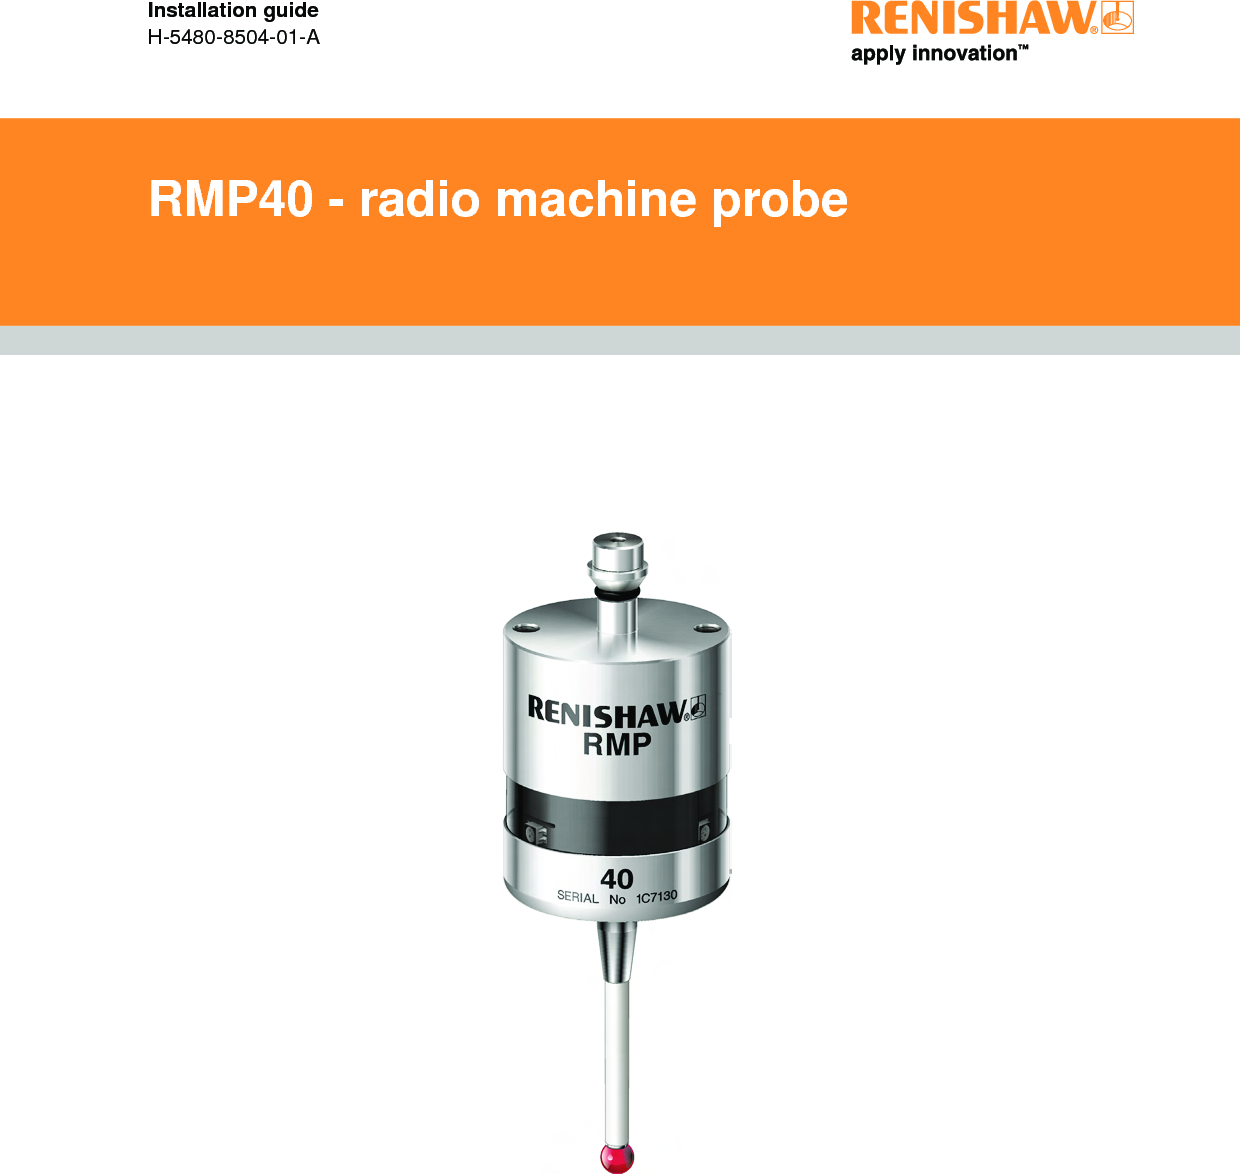 RMP40 - radio machine probeInstallation guideH-5480-8504-01-A